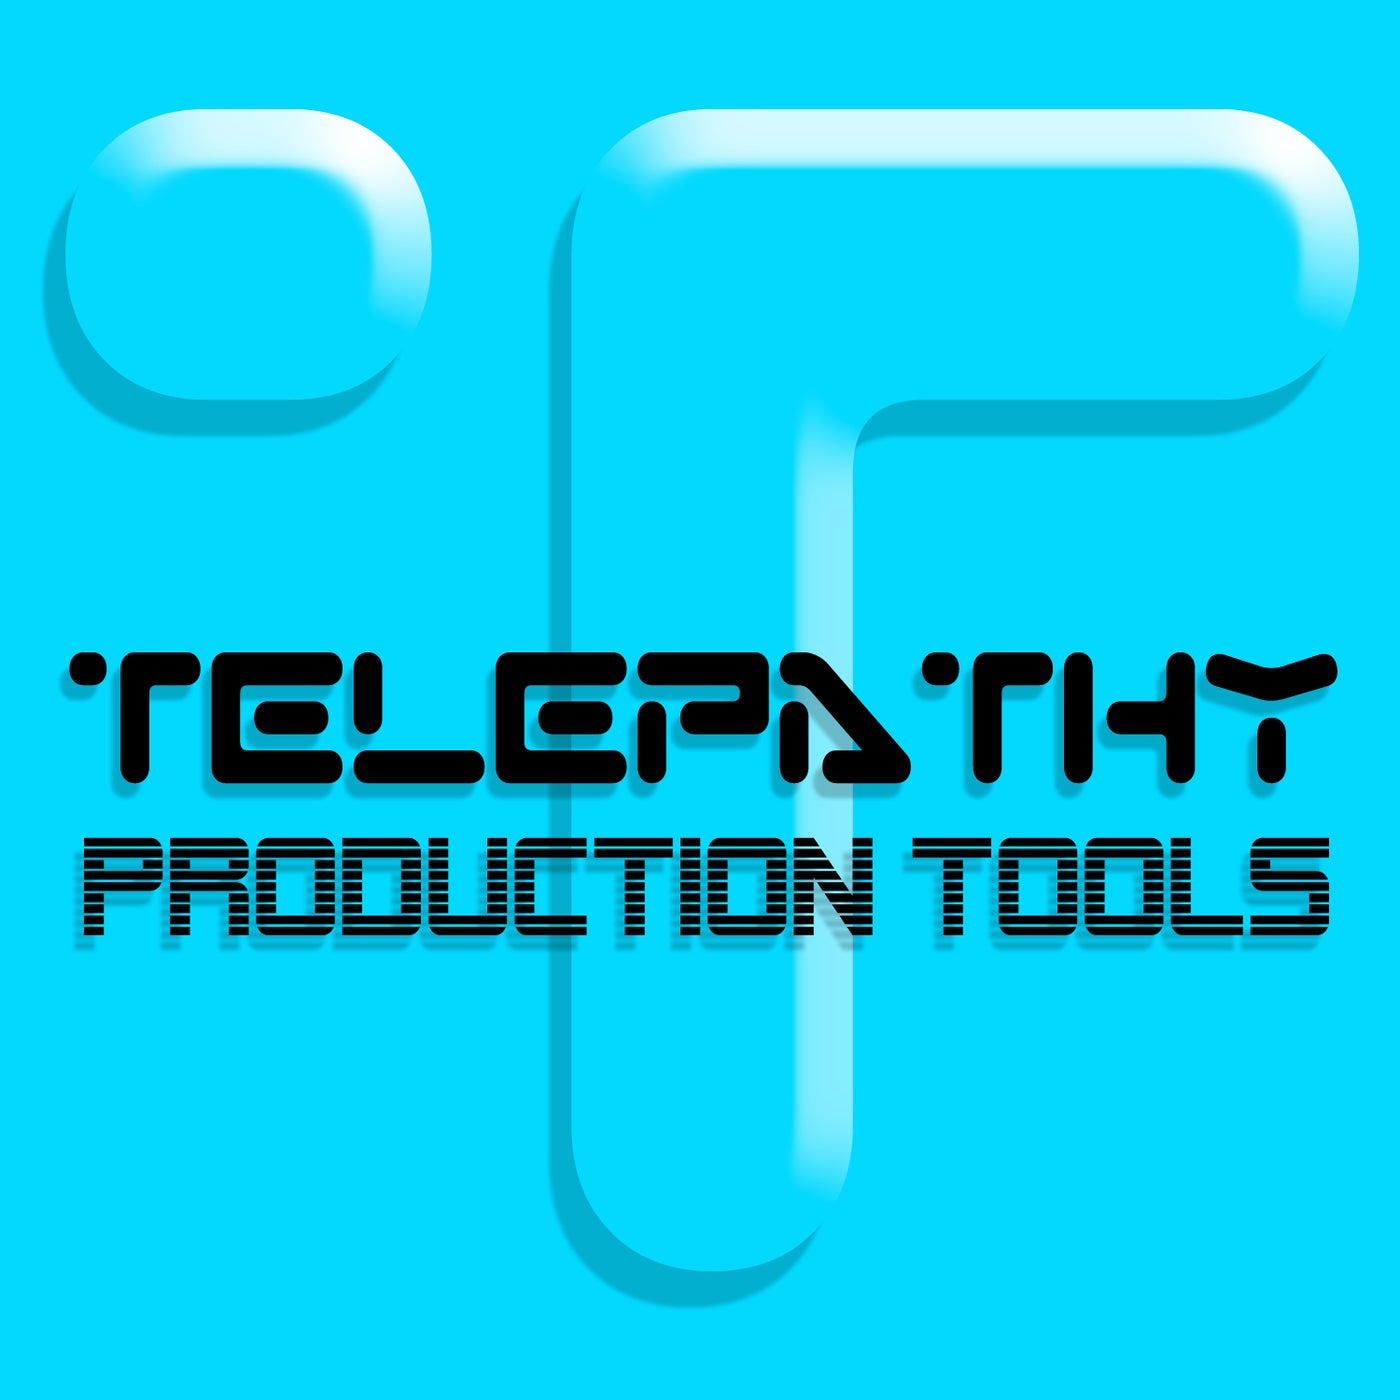 Telepathy Production Tools Volume 27